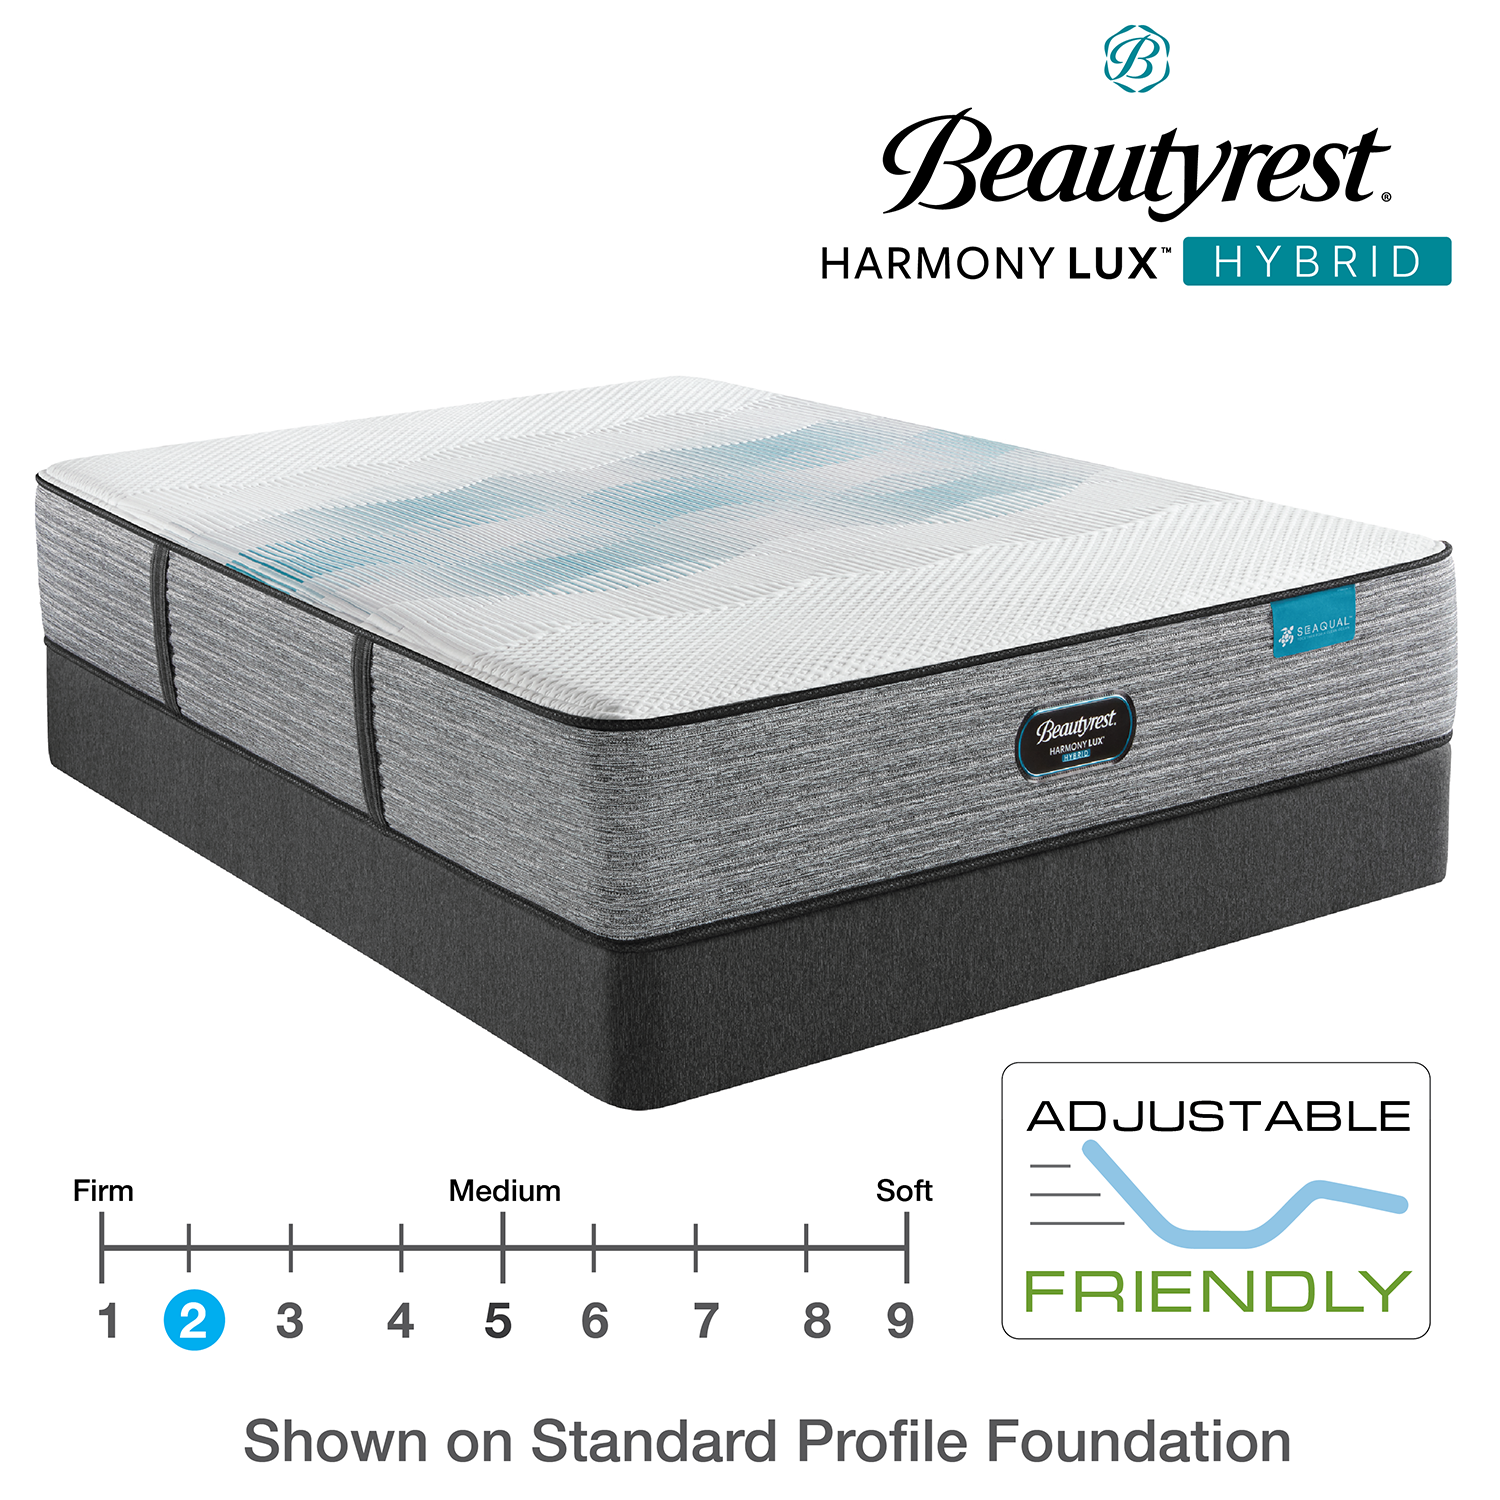 13.5" Beautyrest Harmony Lux Empress Hybrid Firm